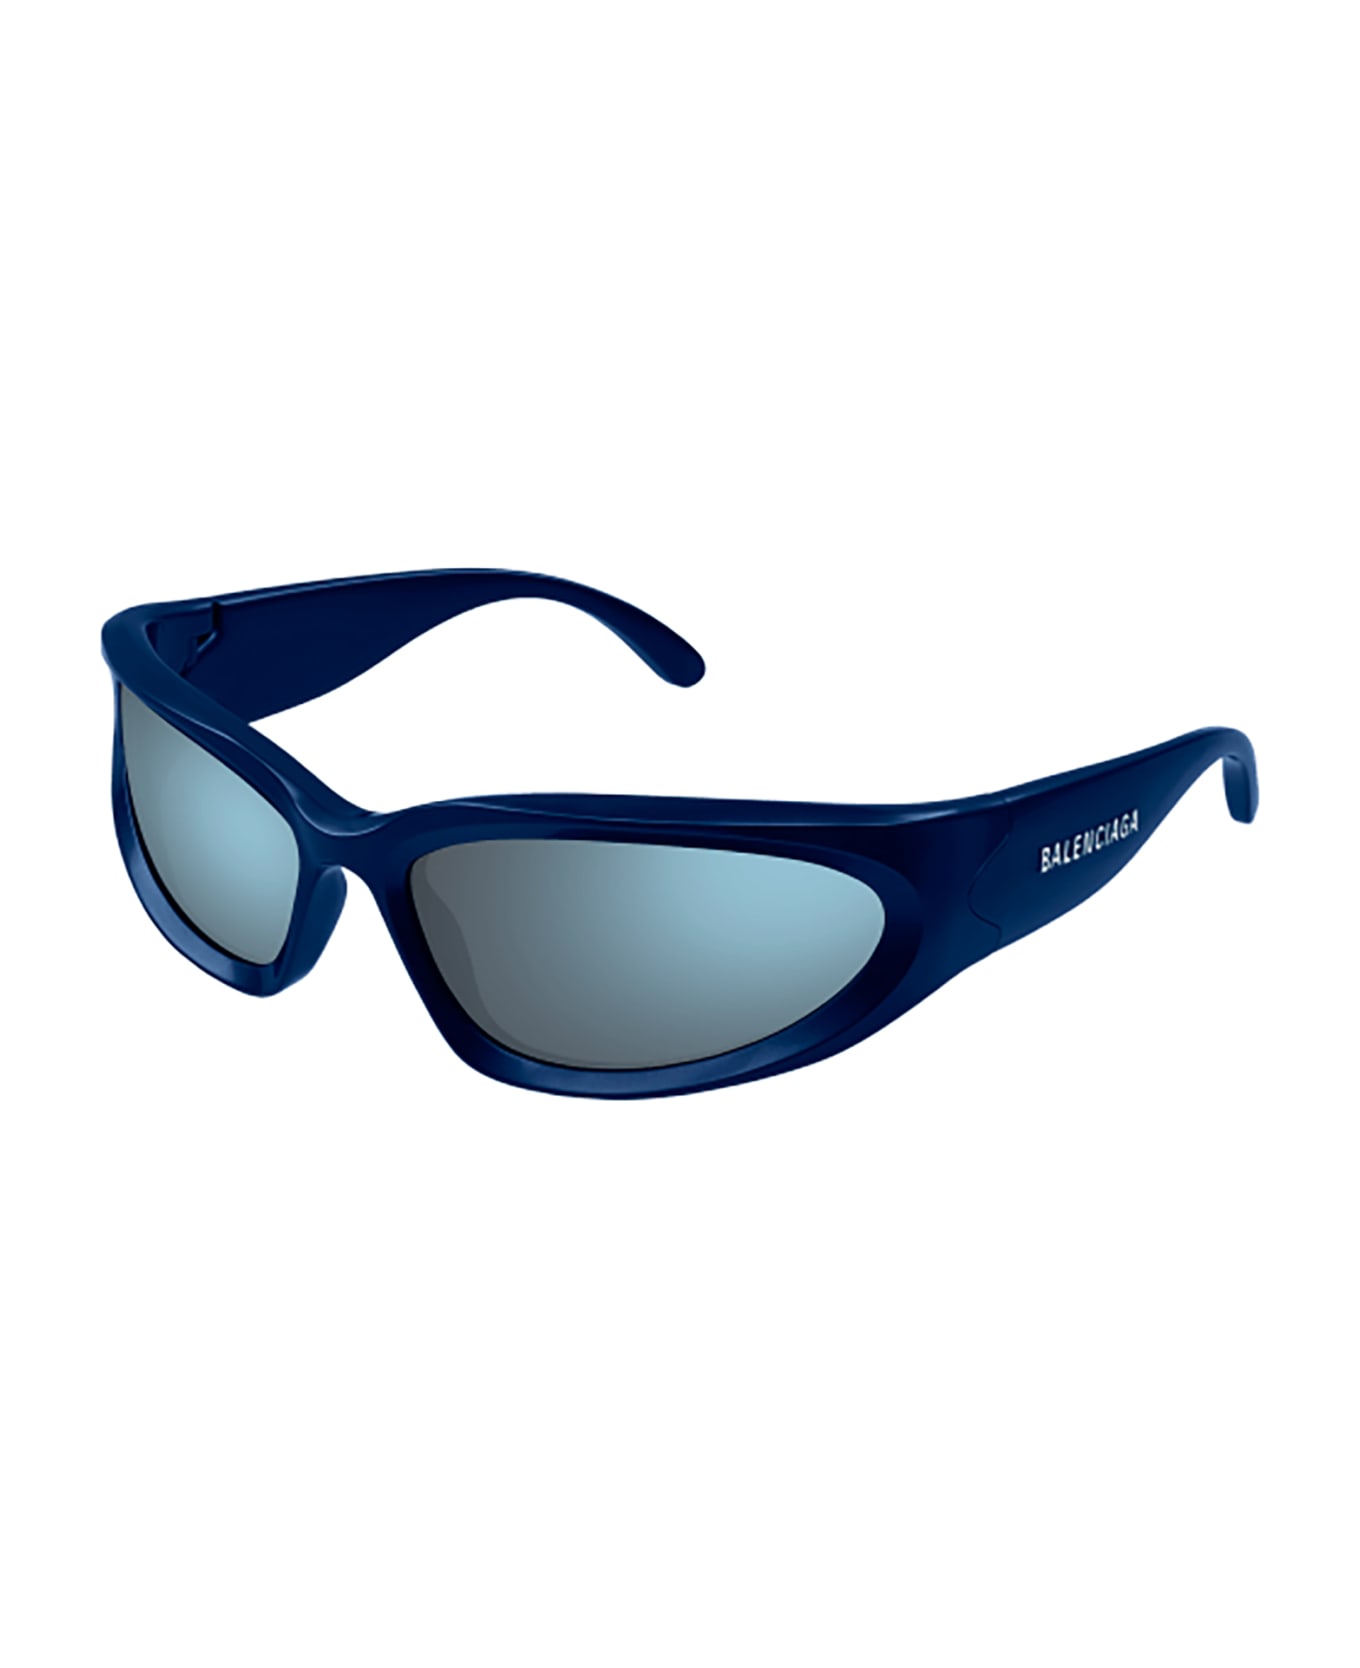 Balenciaga Eyewear Bb0157s Sunglasses - 009 blue blue blue